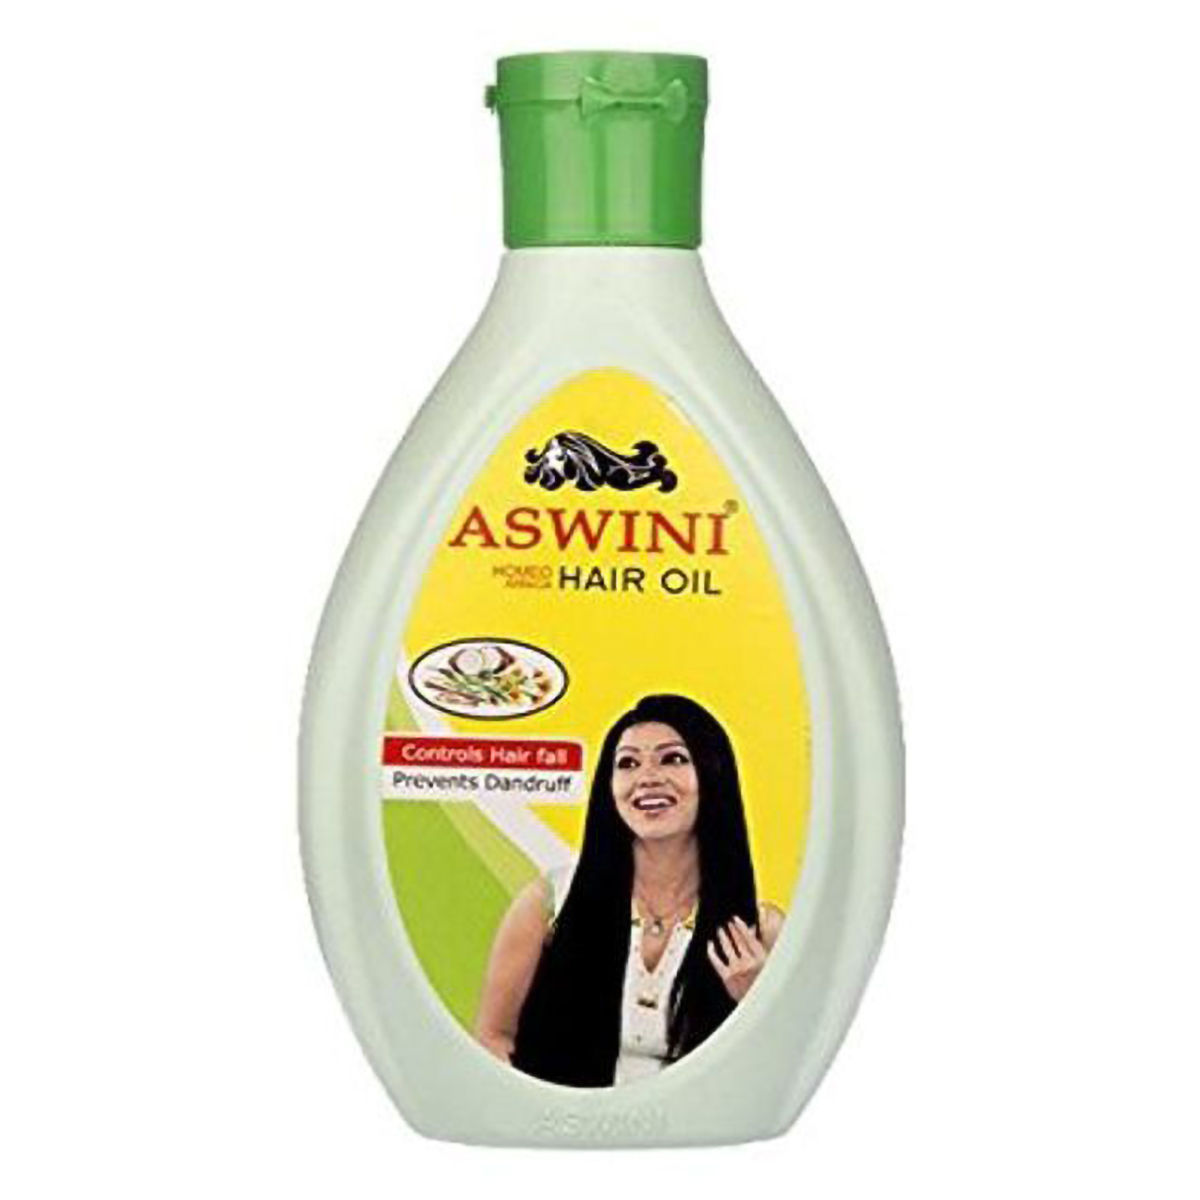 Buy Aswini Hair Oil, 400 ml Online